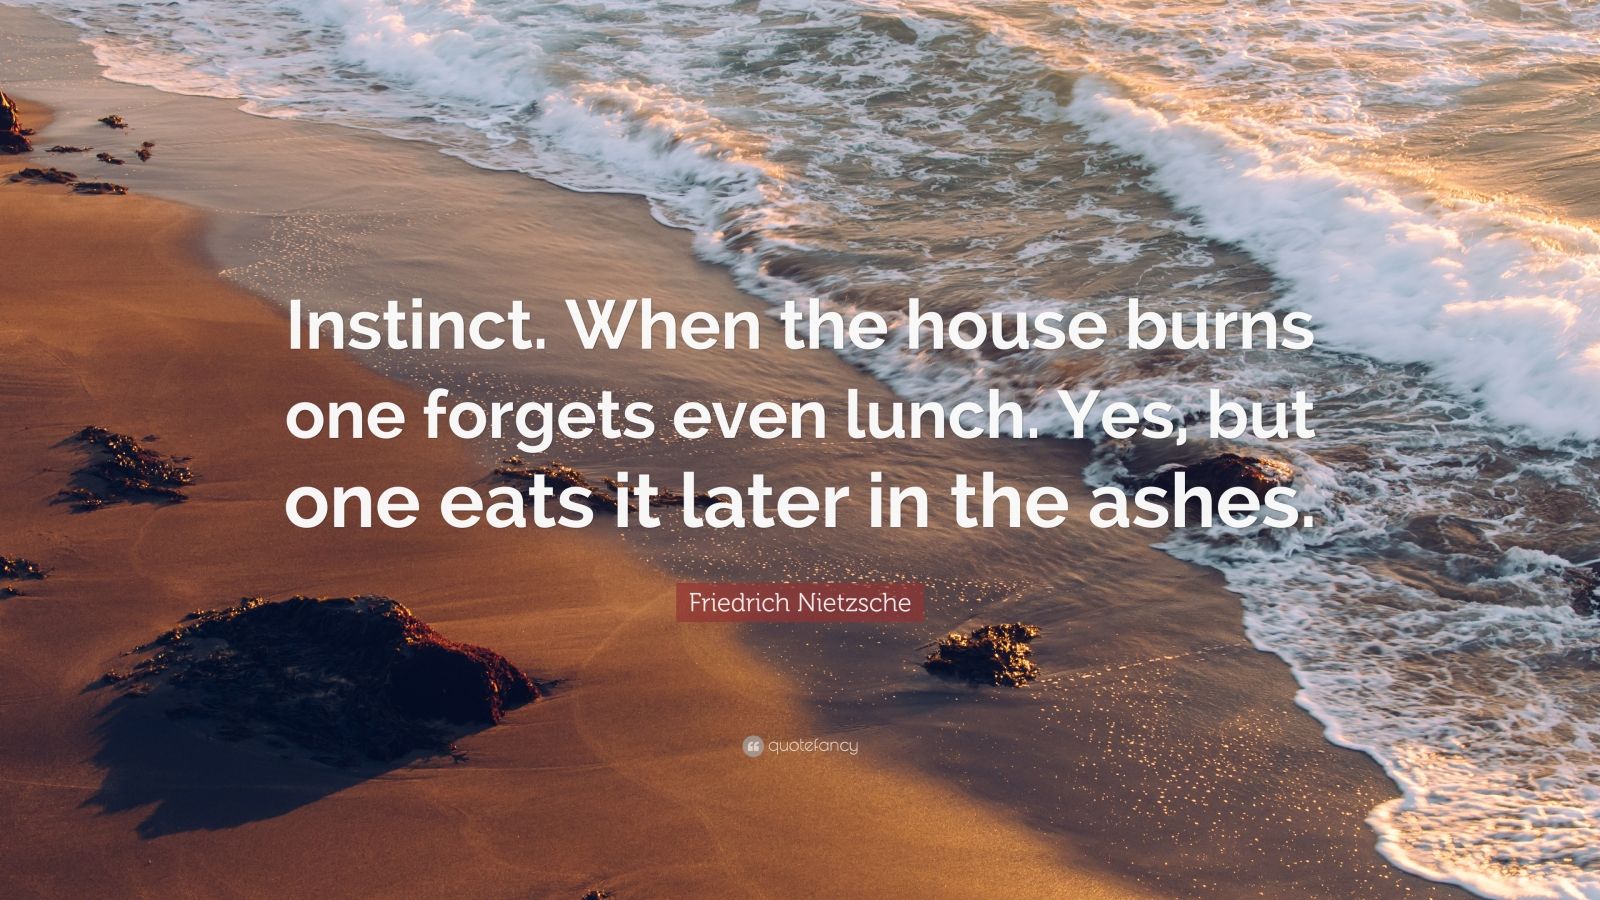 Friedrich Nietzsche Quote: “Instinct. When the house burns one forgets